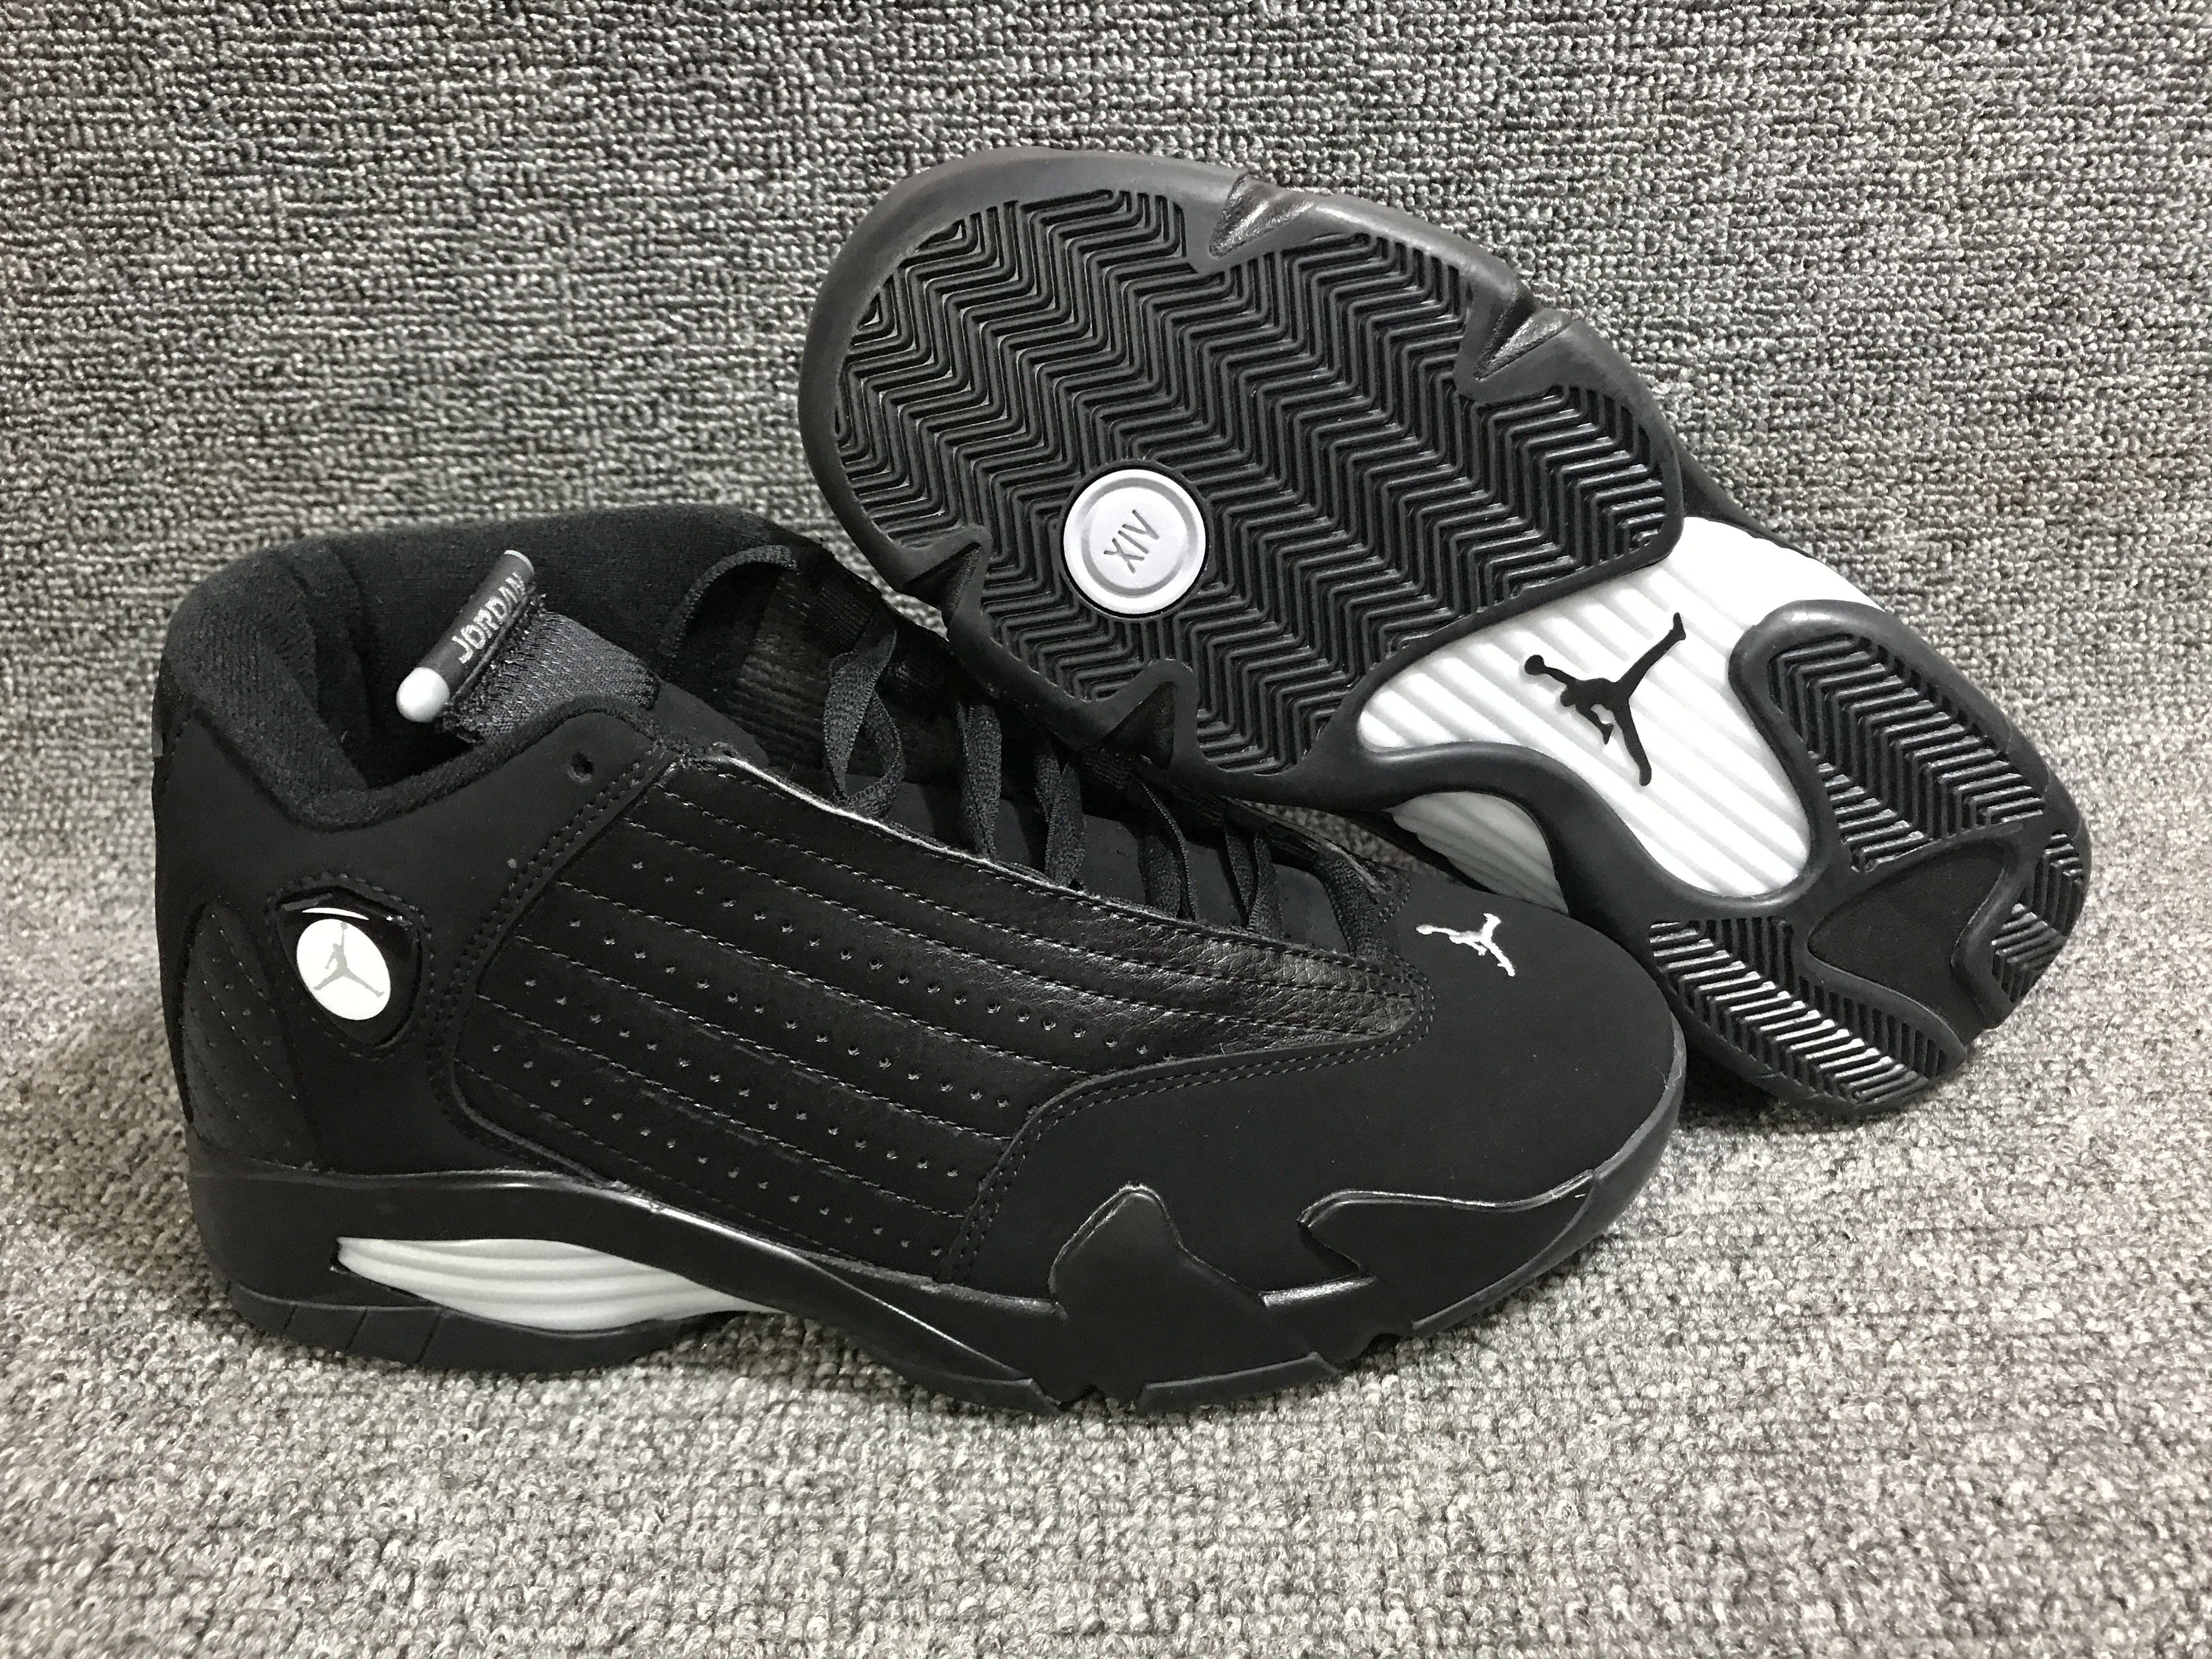 New Air Jordan 14 Black White Shoes